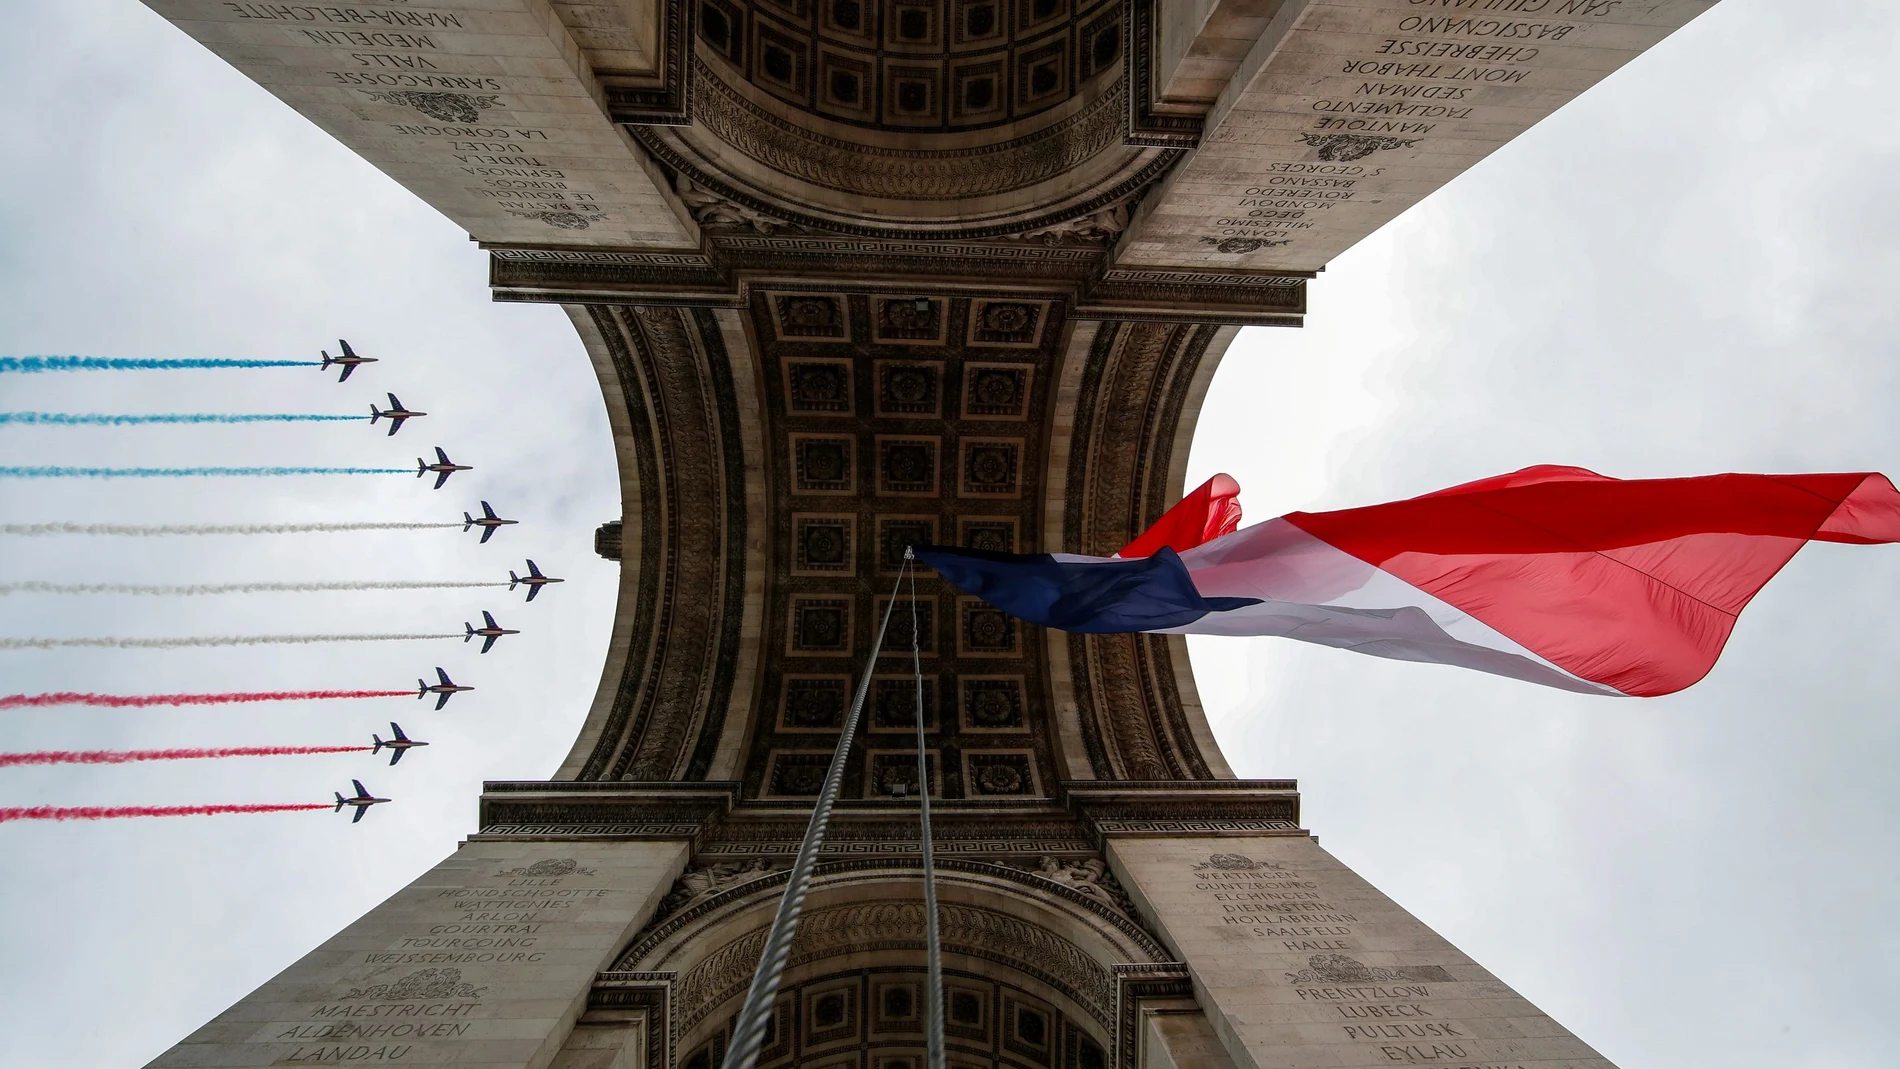 The Bastille Day ceremony in Paris